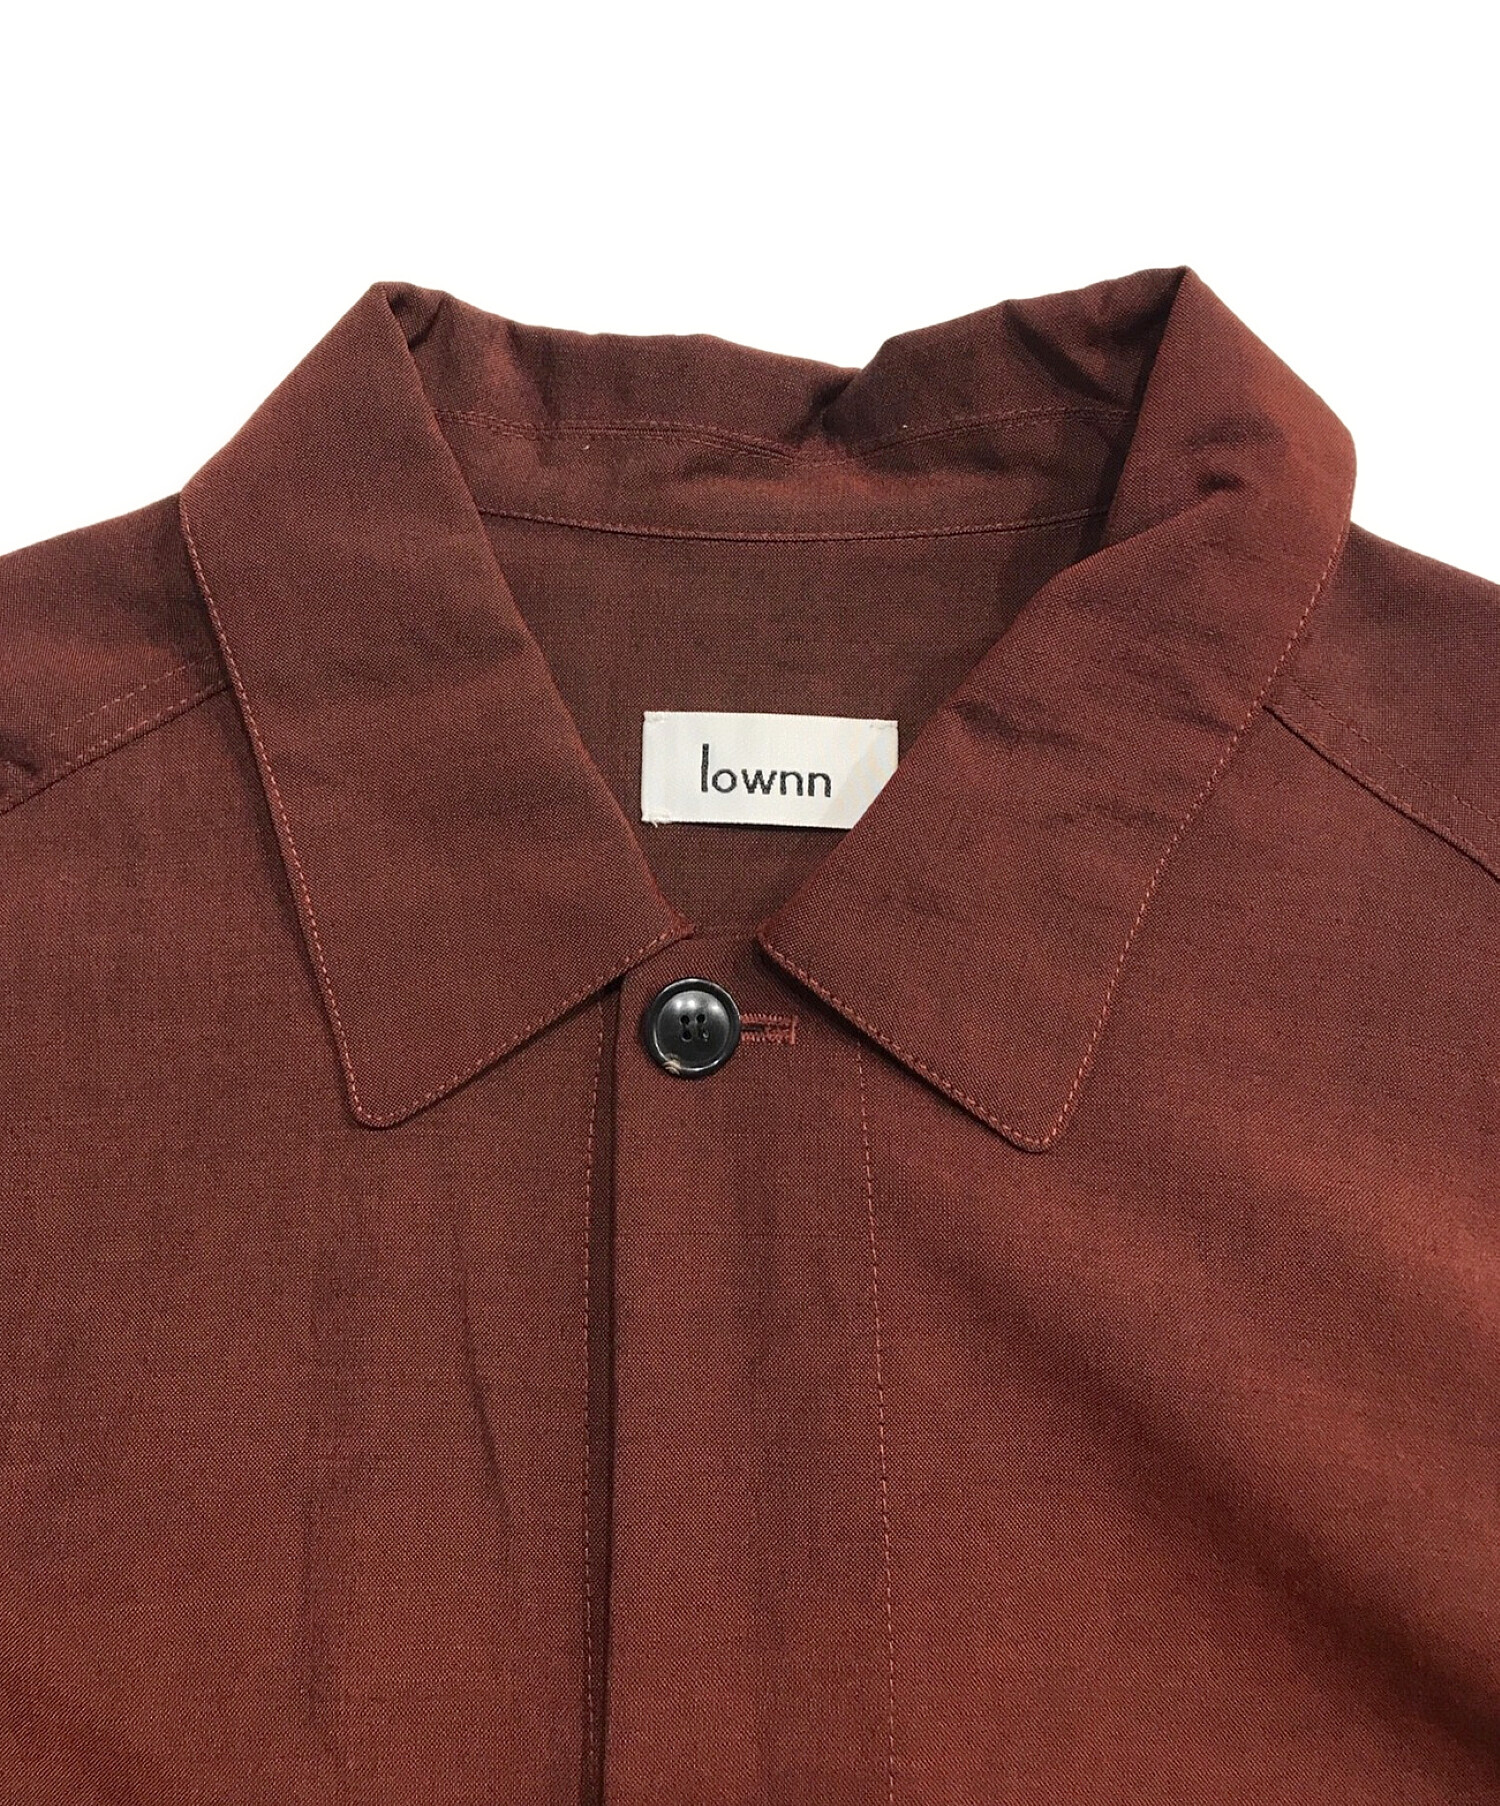 lownn (ローン) ウールモヘヤシャツジャケット ブラウン サイズ:48